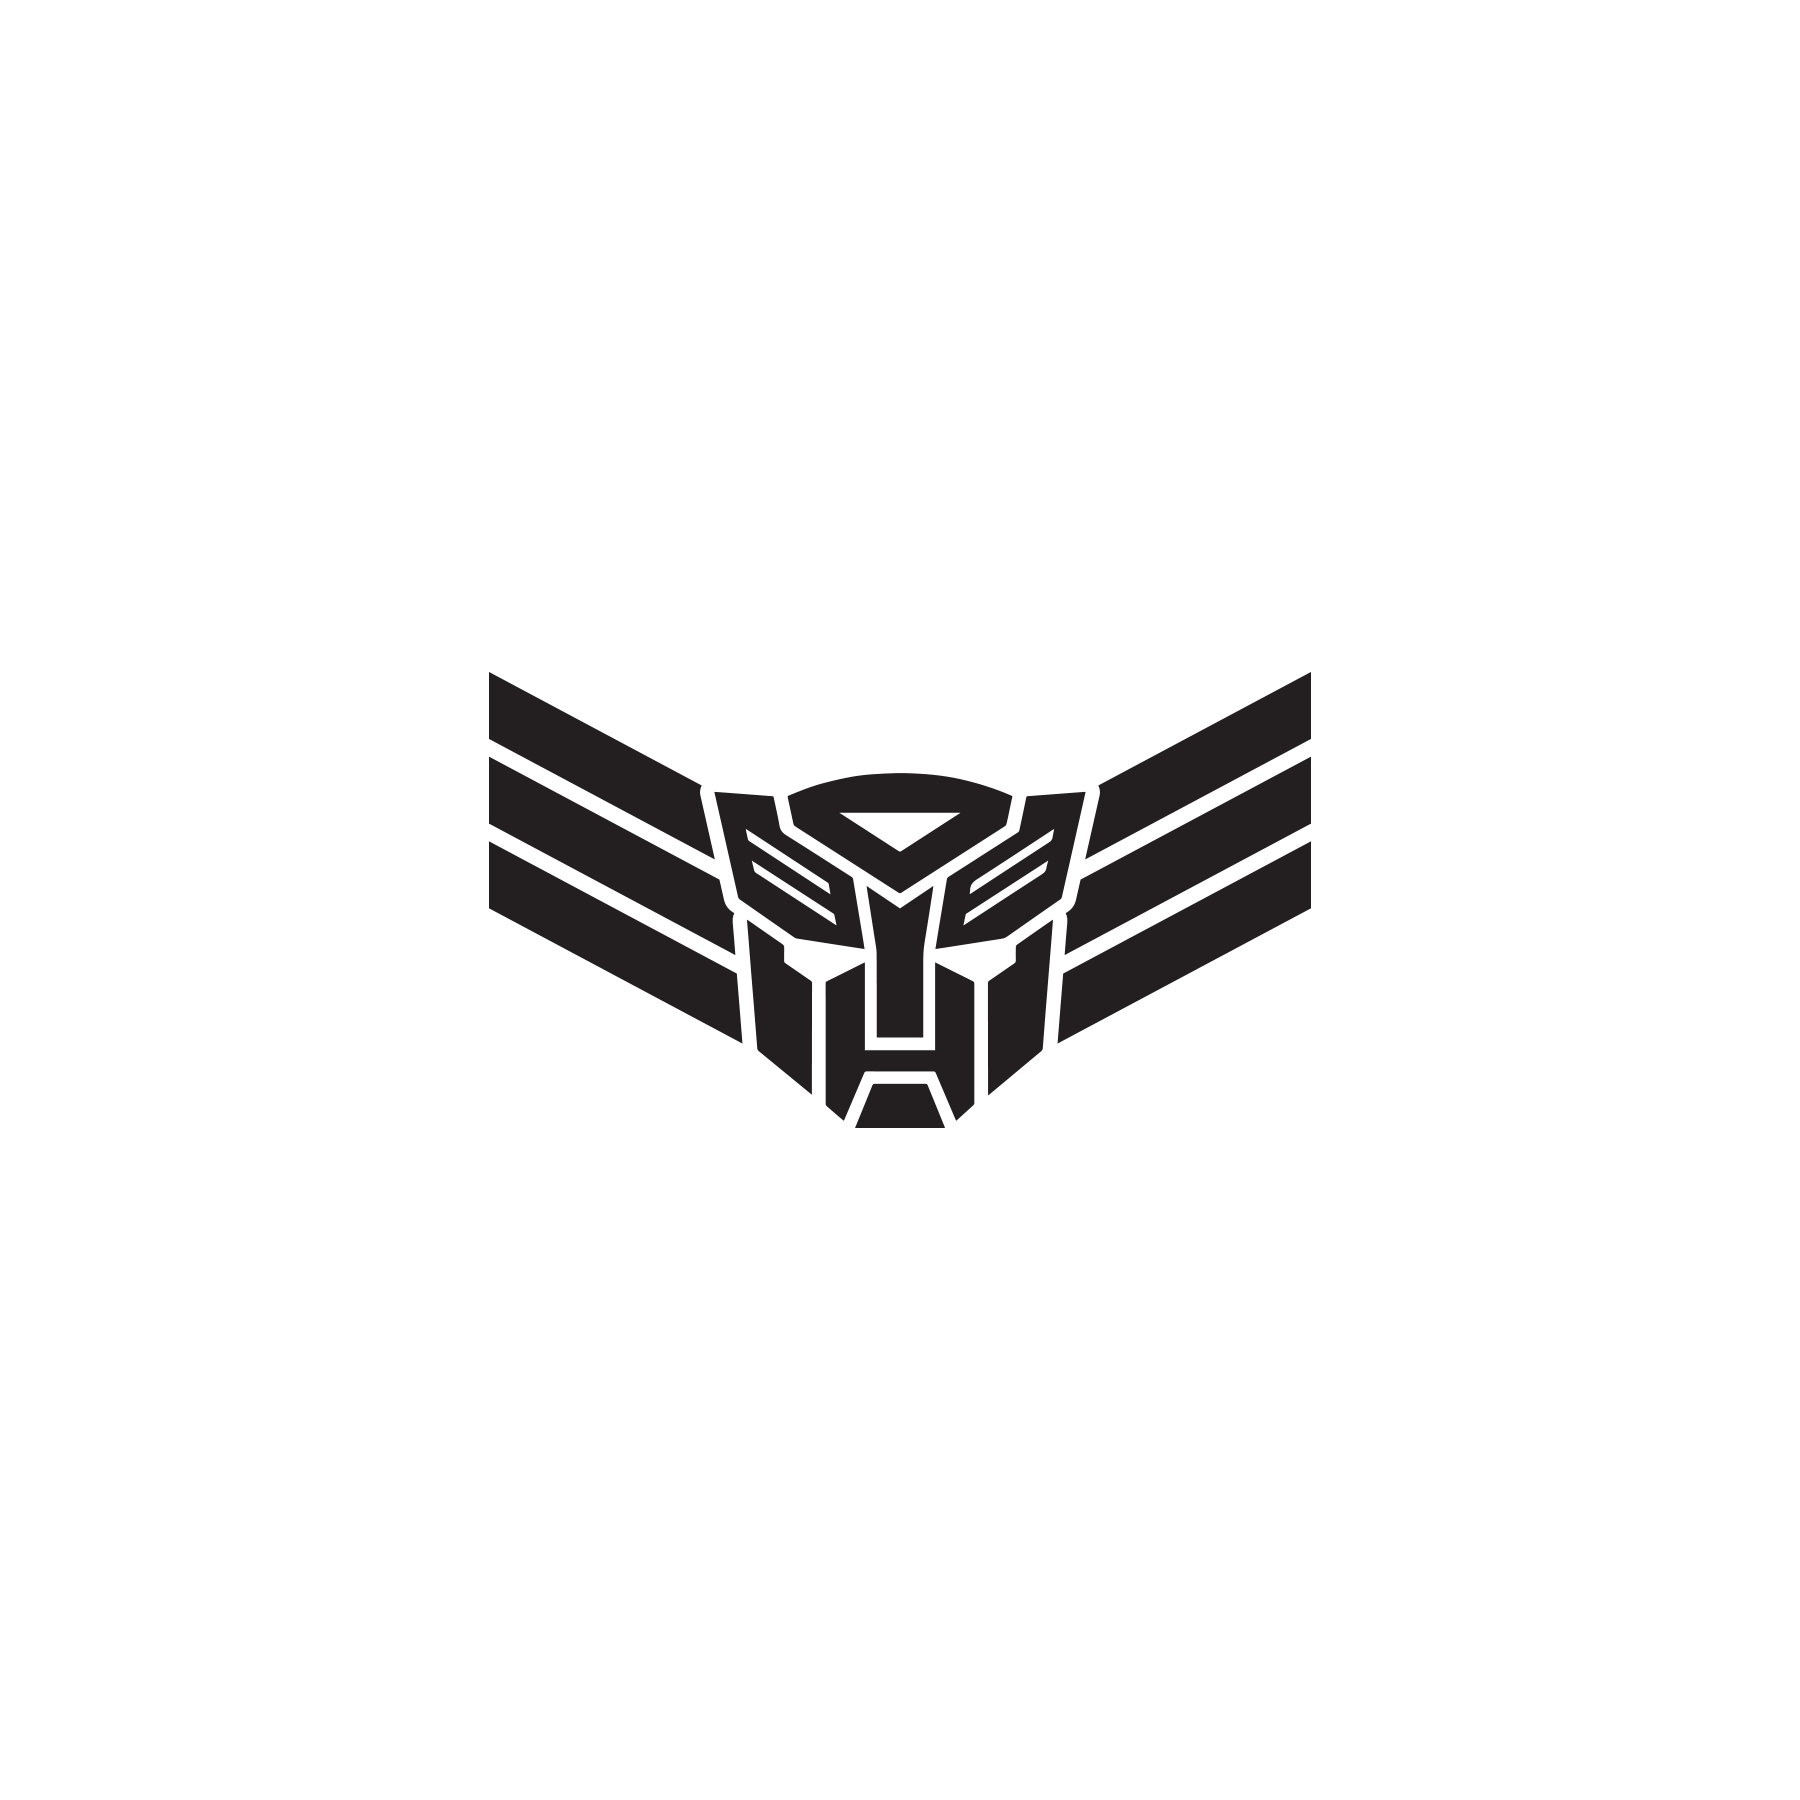 transformers logo black and white